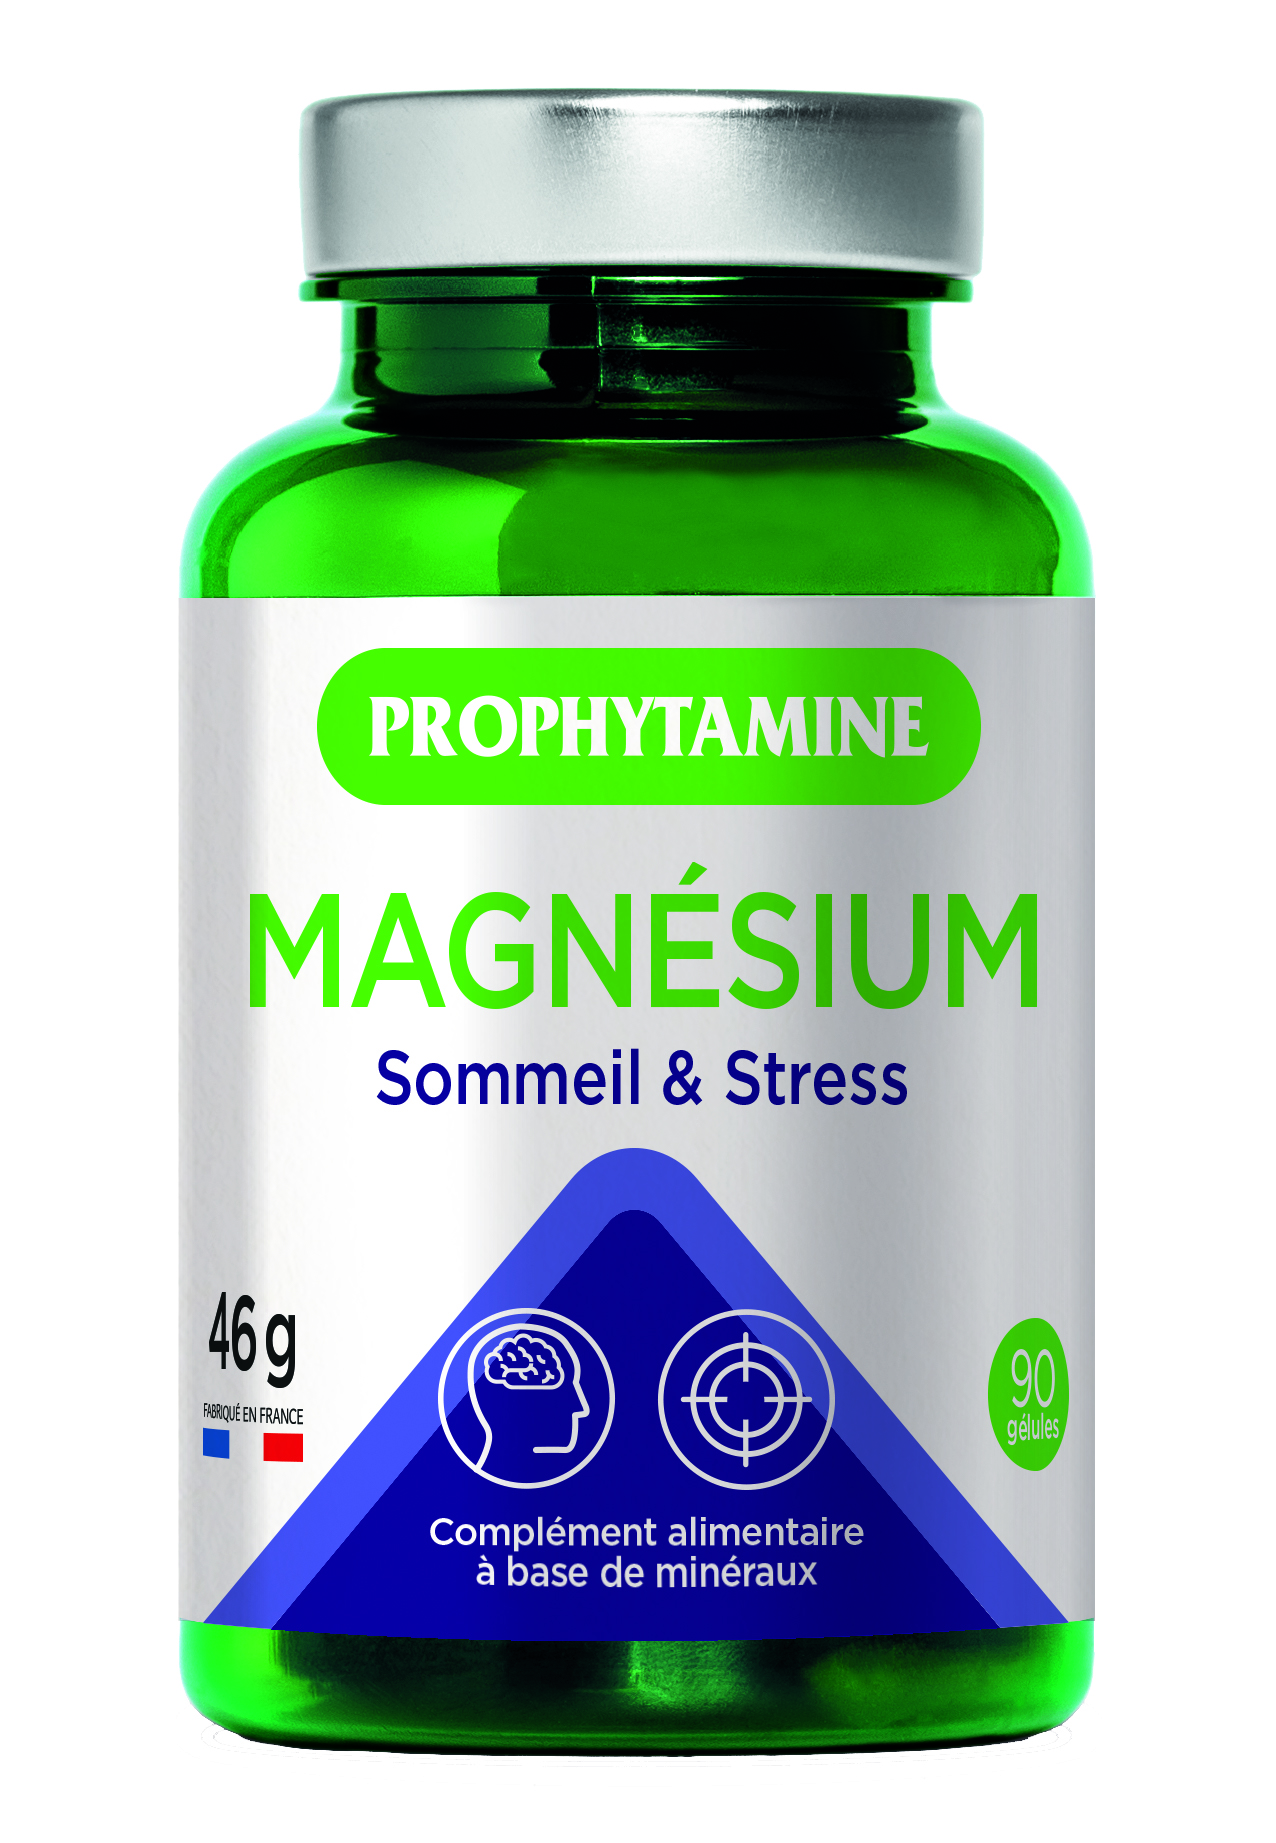 Slaapstress Magnesium (9 X 90 Gel) - PROPHYTAMINE